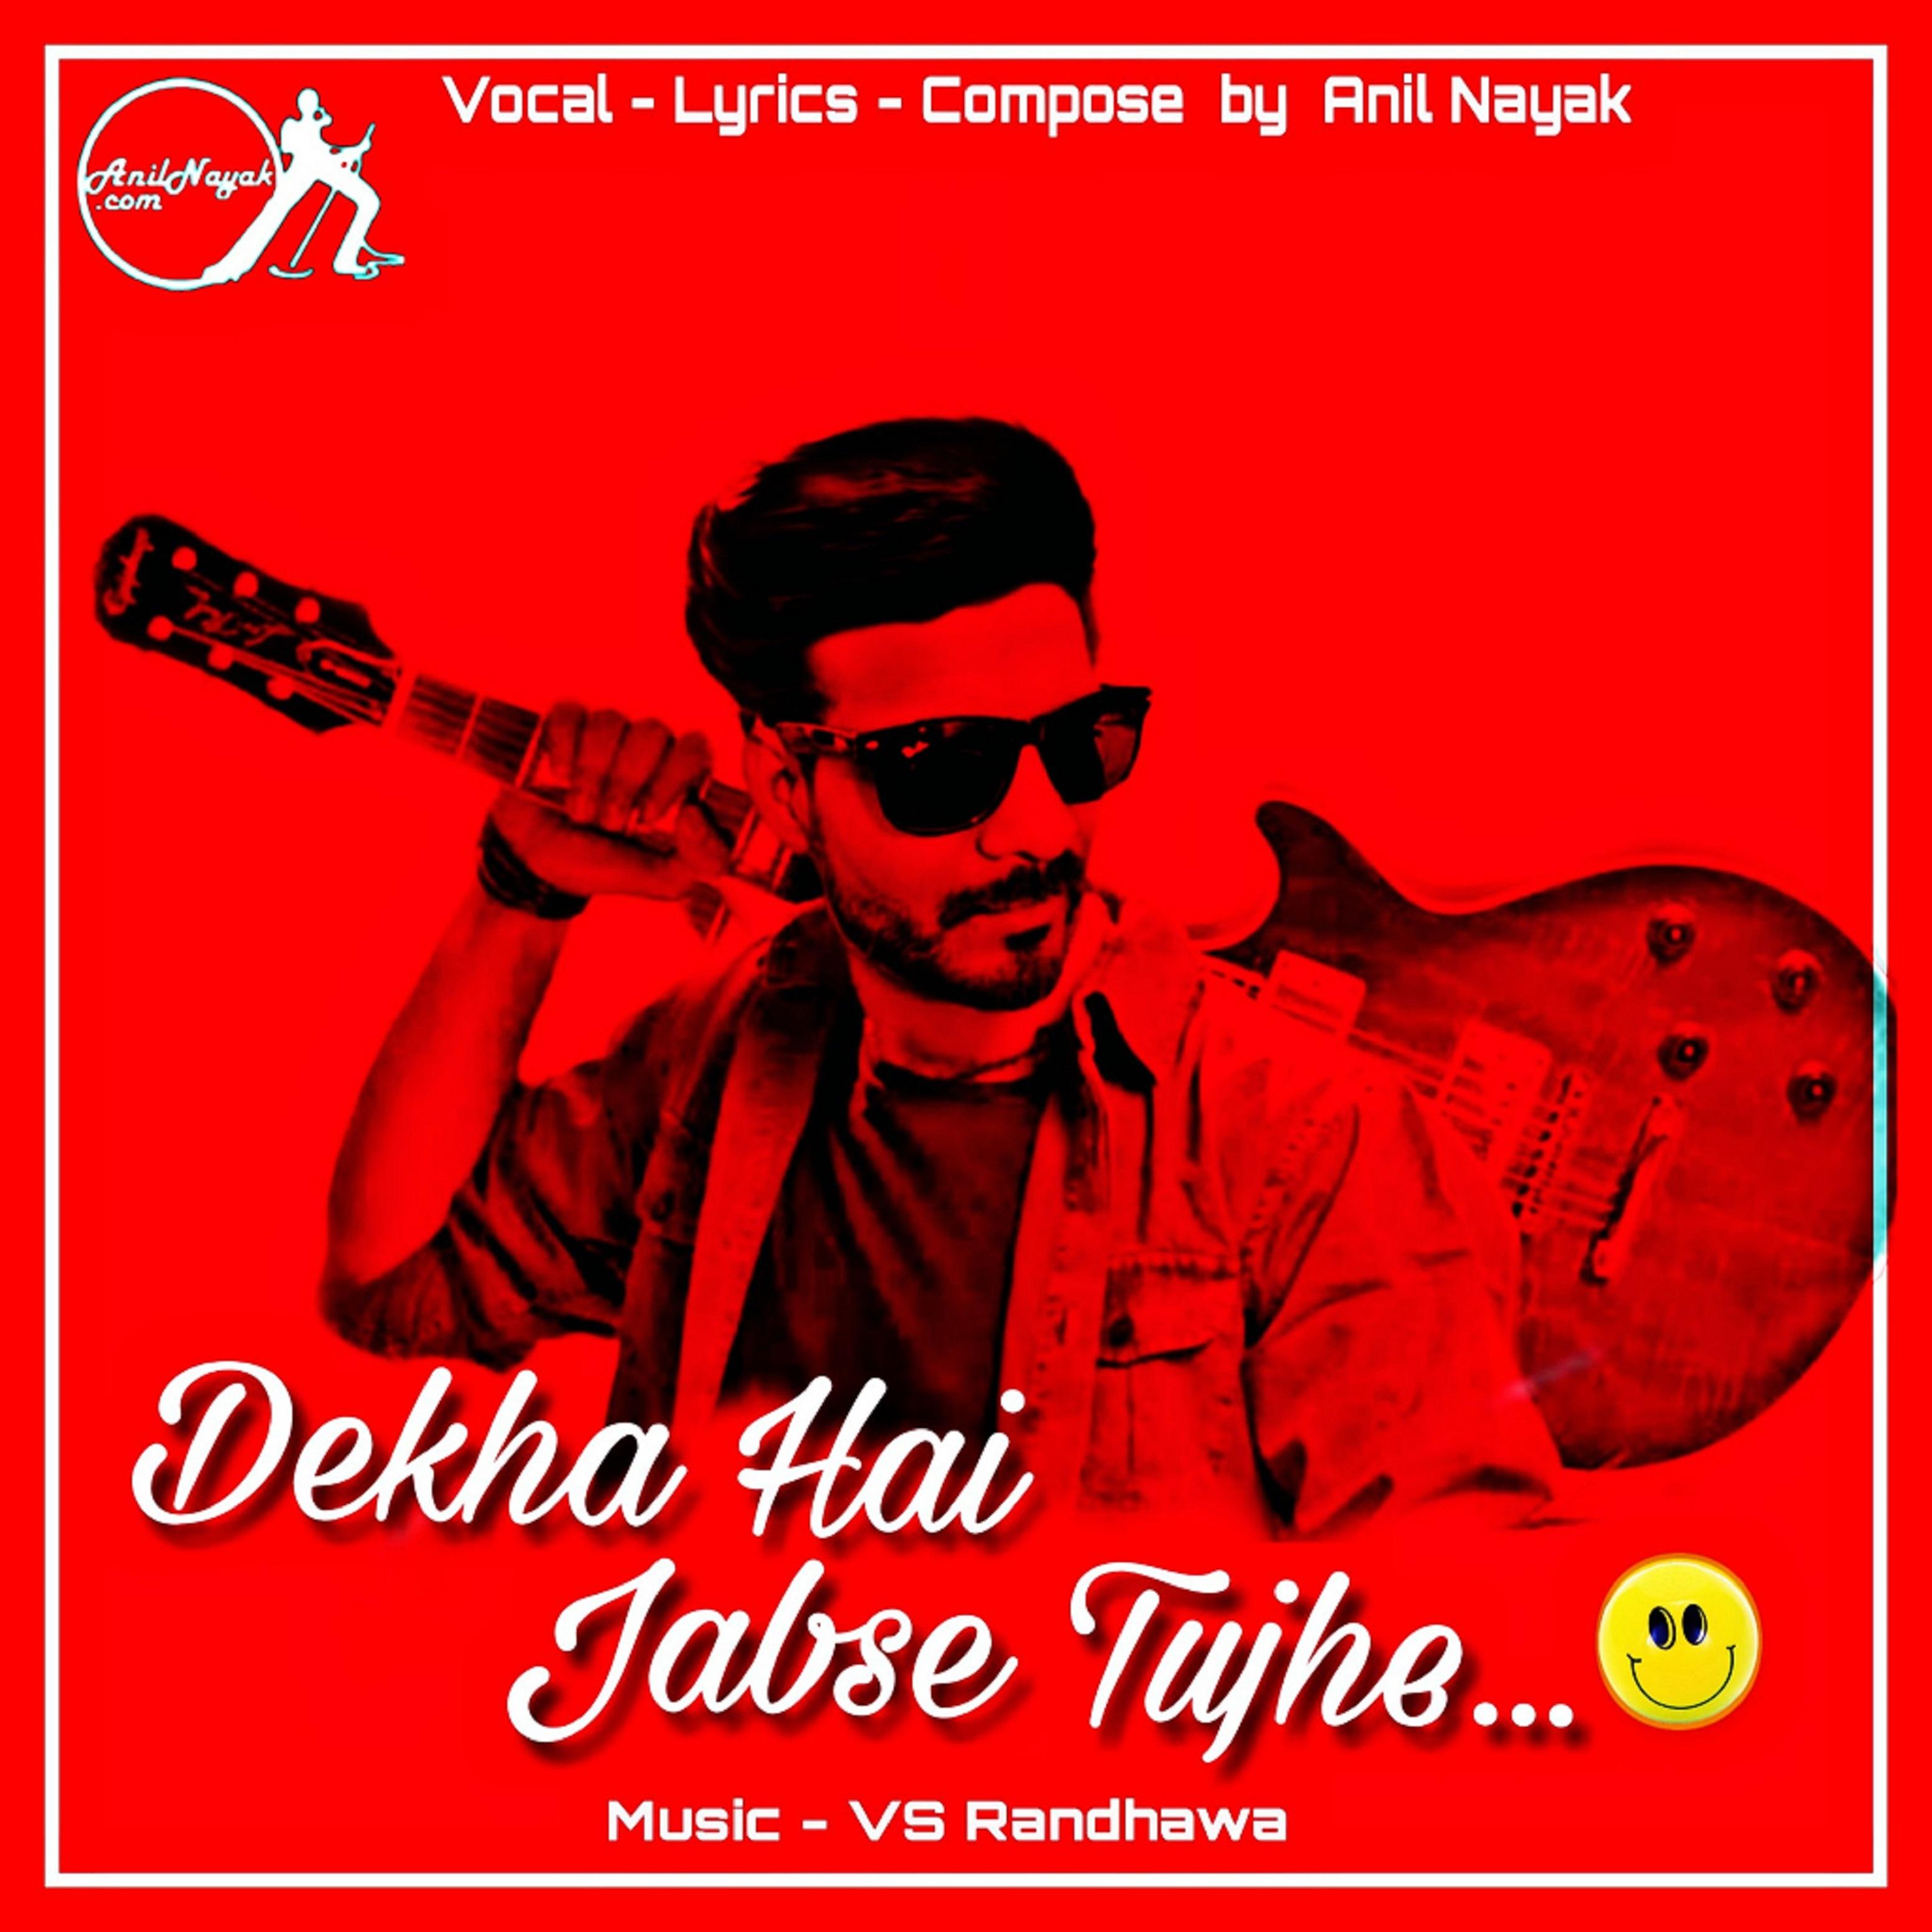 Dekha Hai Jabse Tujhe (Official Soundtrack)